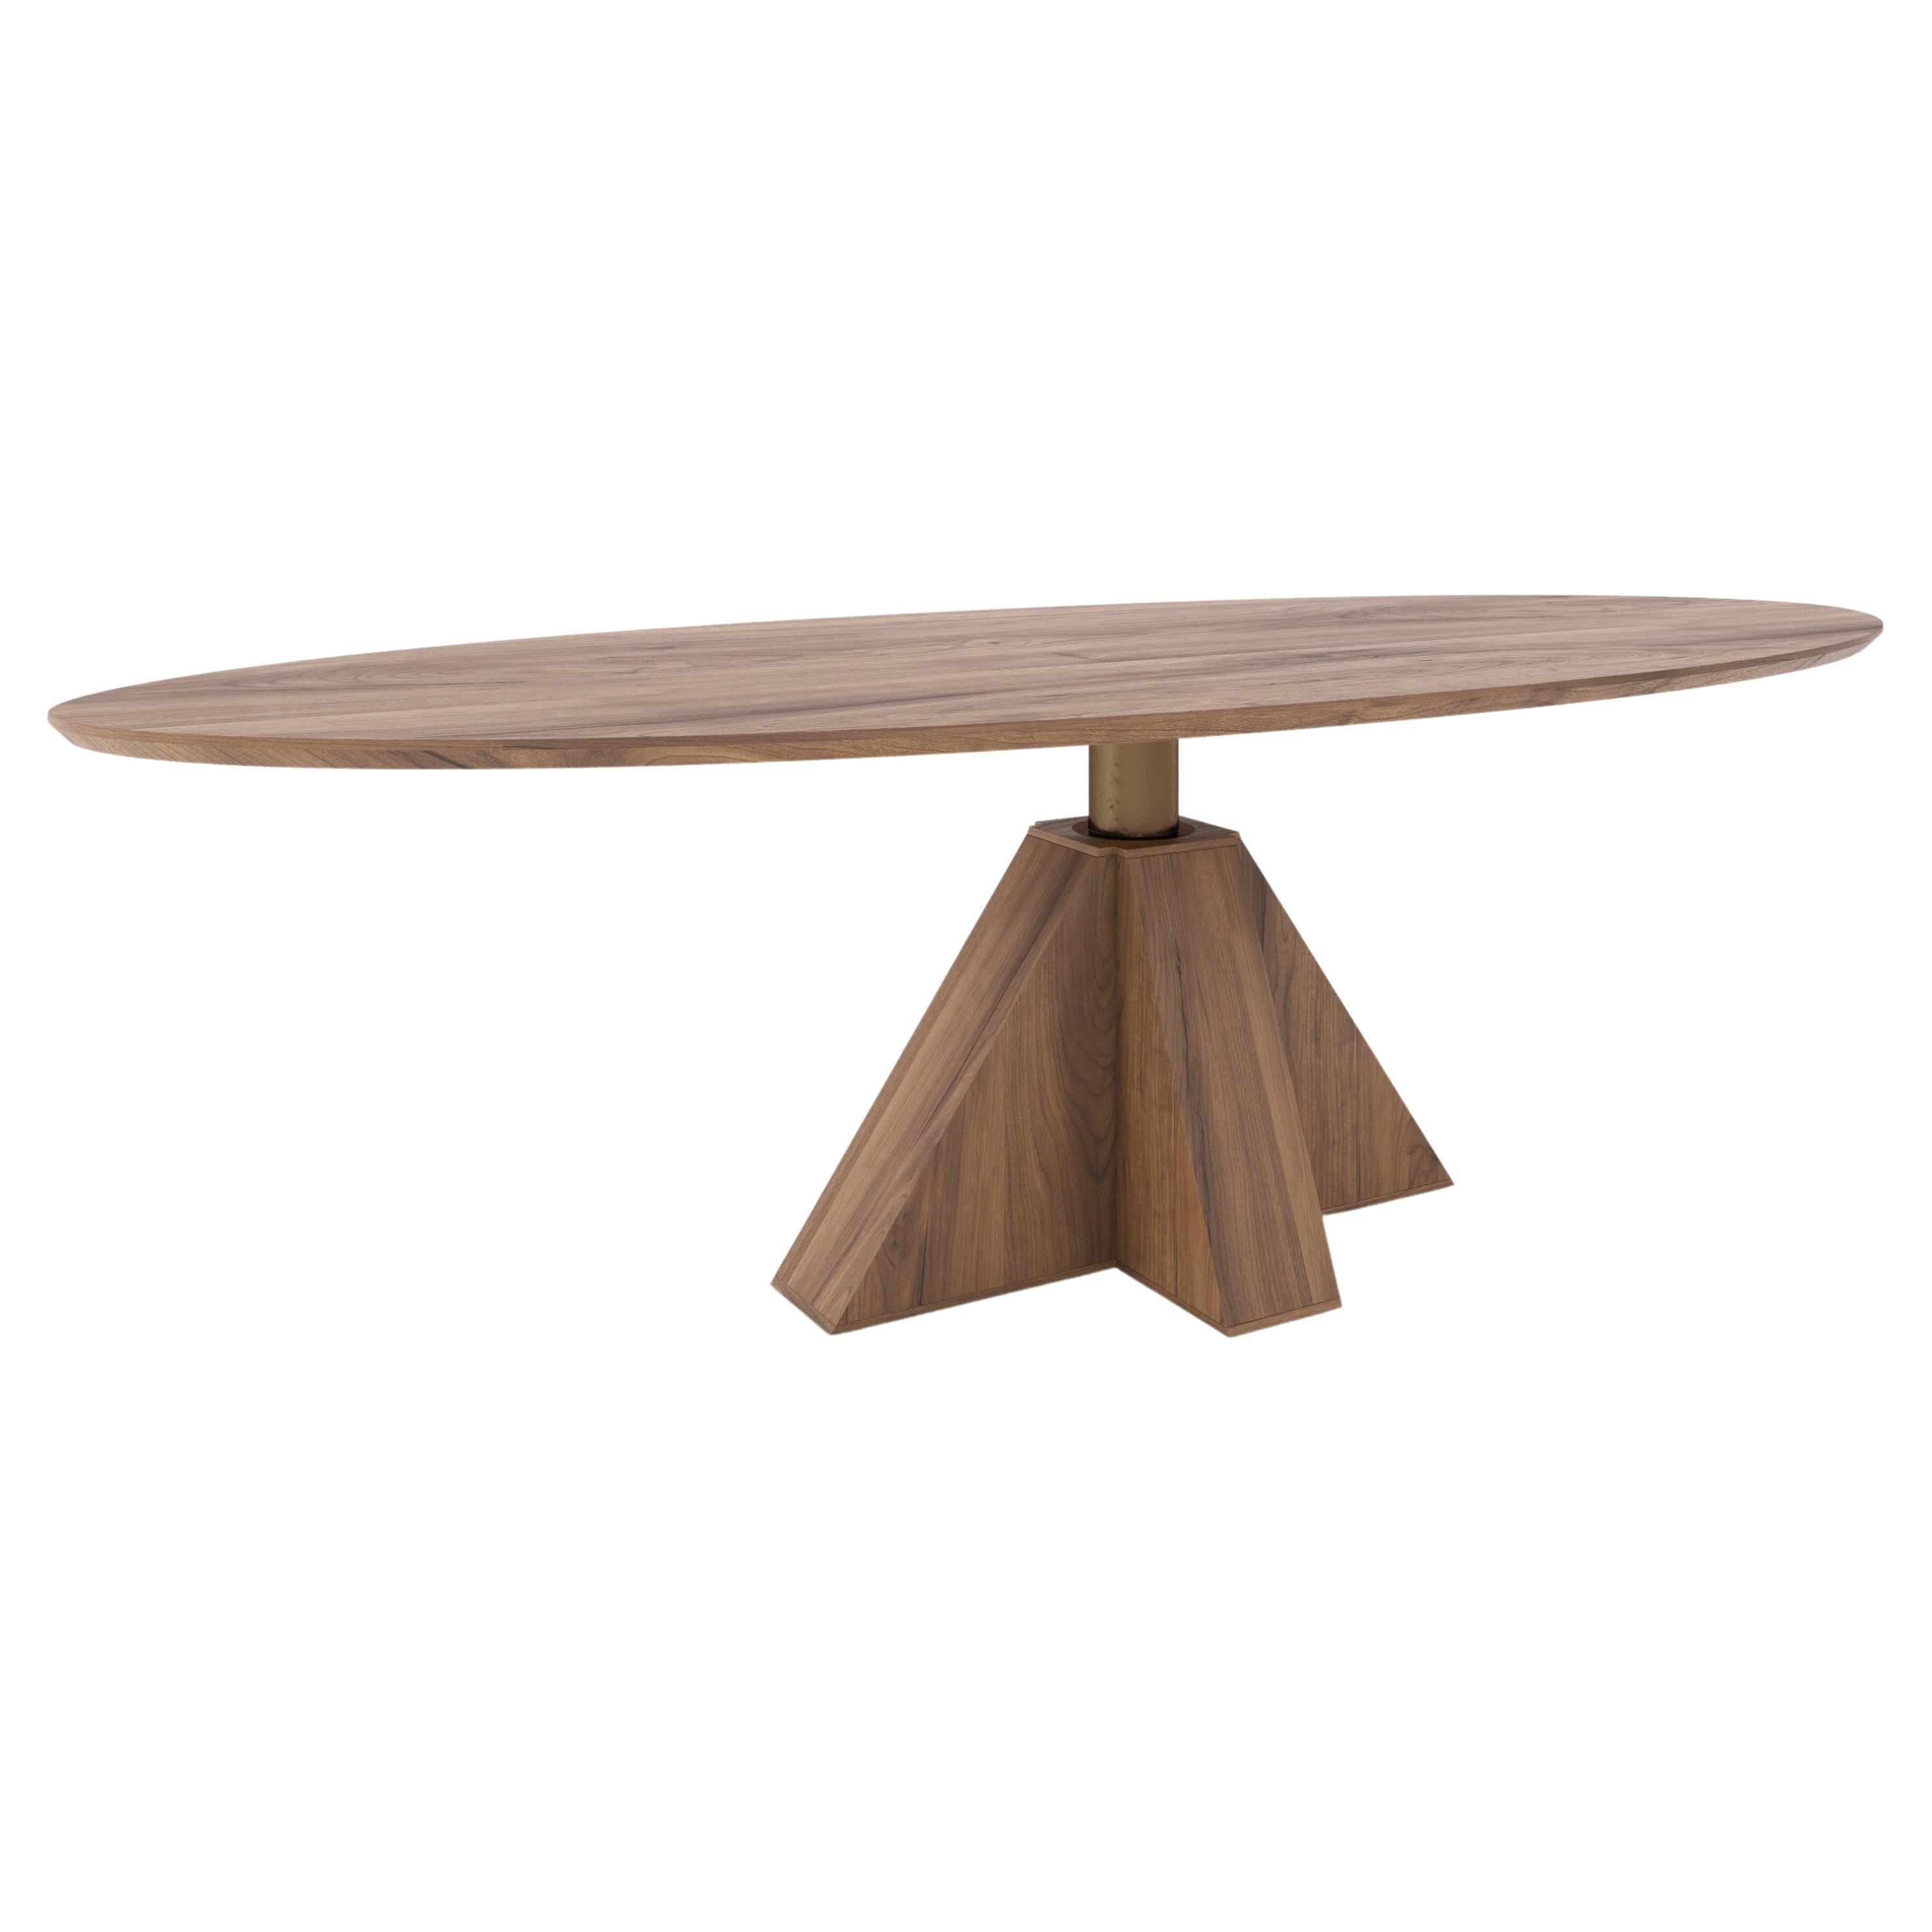 M-Oval Table by Daniel Boddam, 60" x 36", Walnut